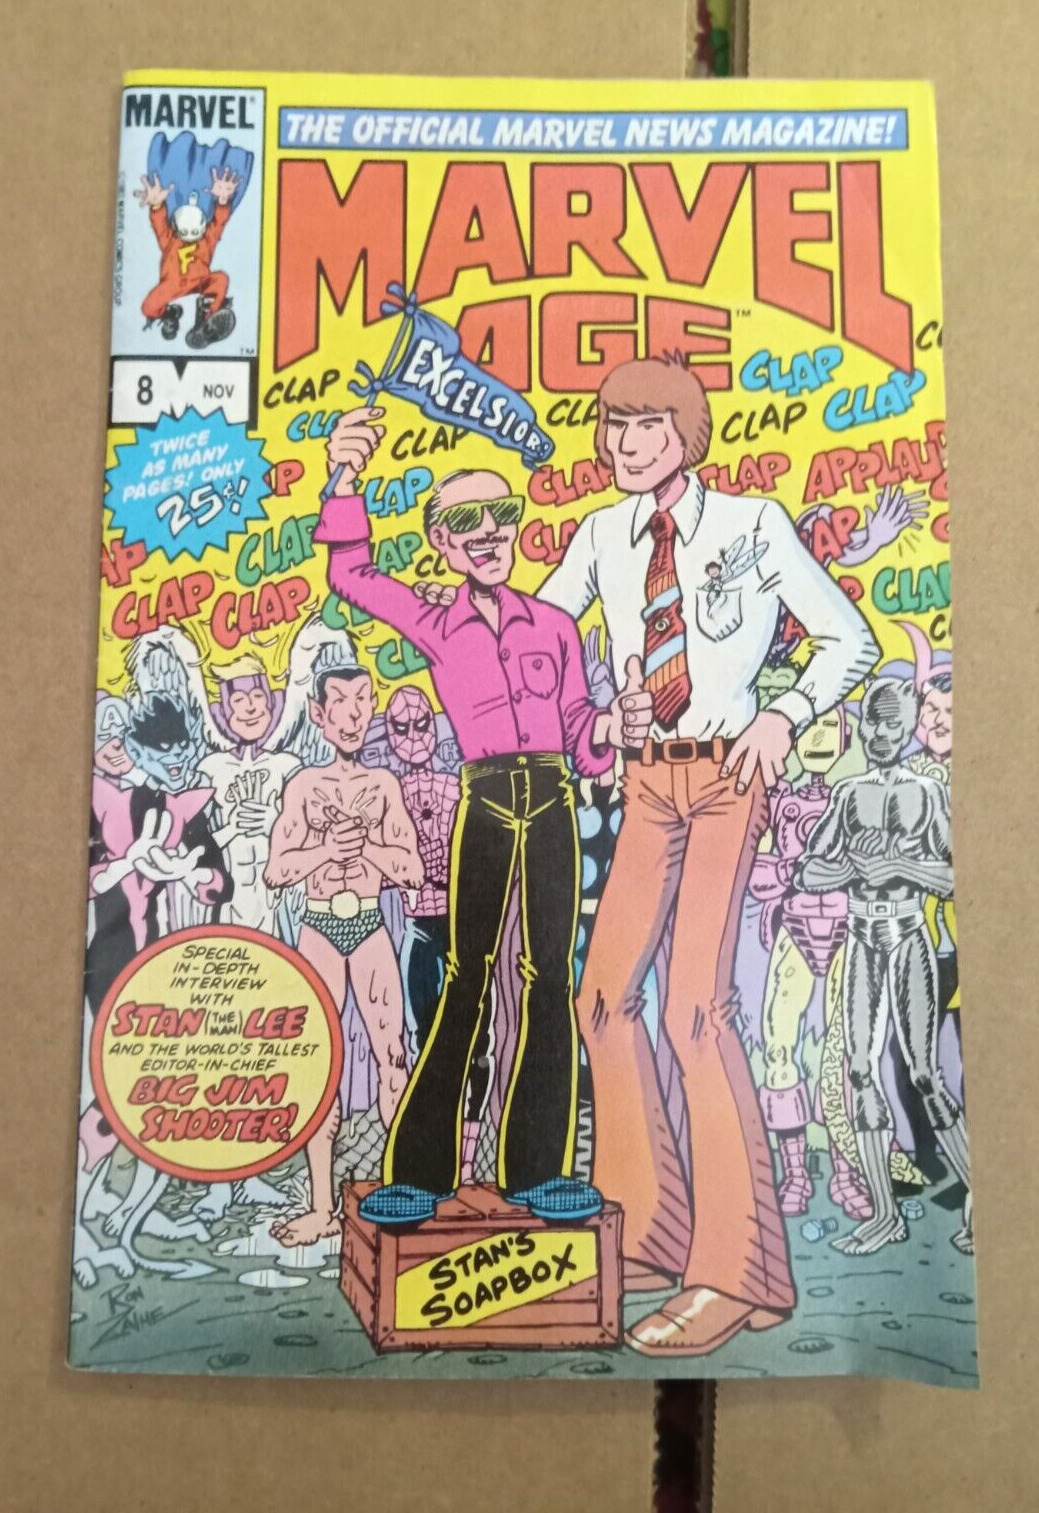 Marvel news Magazine Marvel Age Vol. 1 #8 featuring Stan Lee